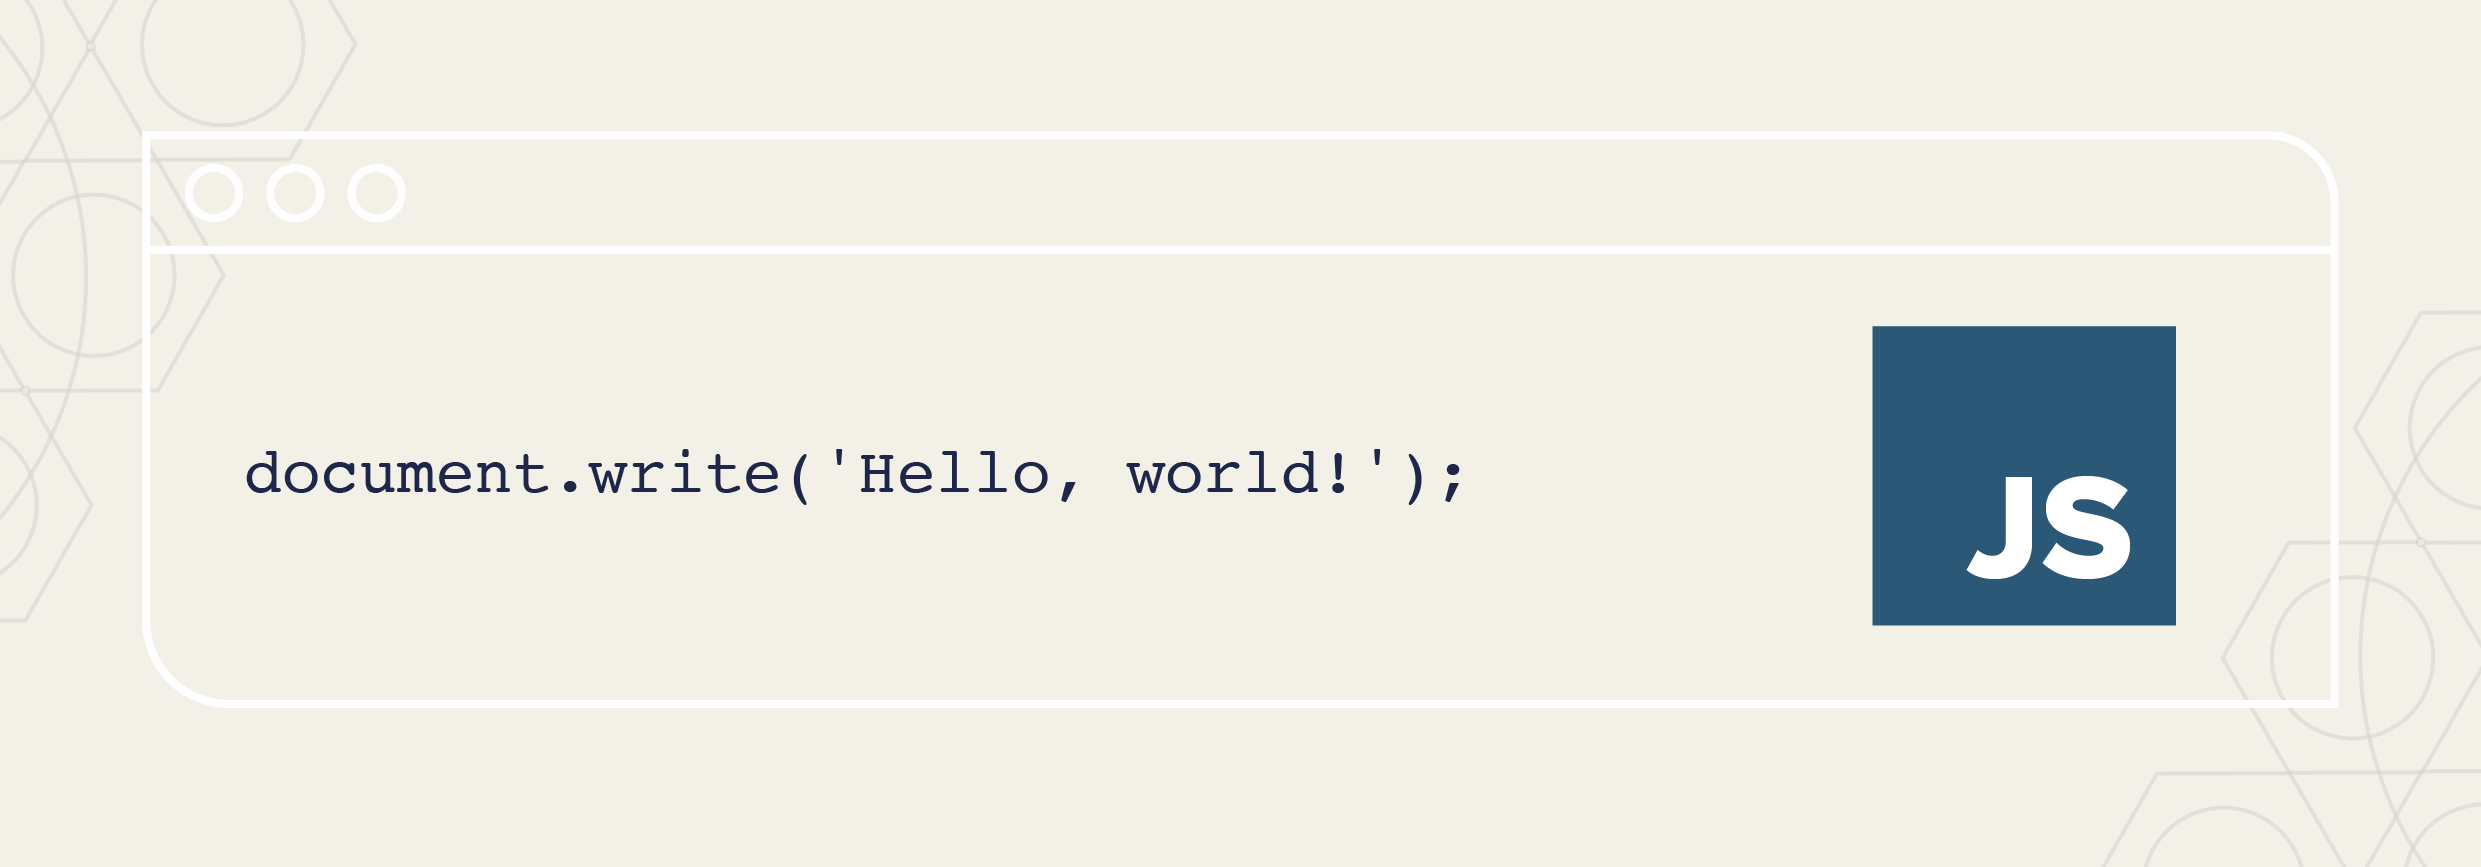 javascript programming language "hello world" code and logo